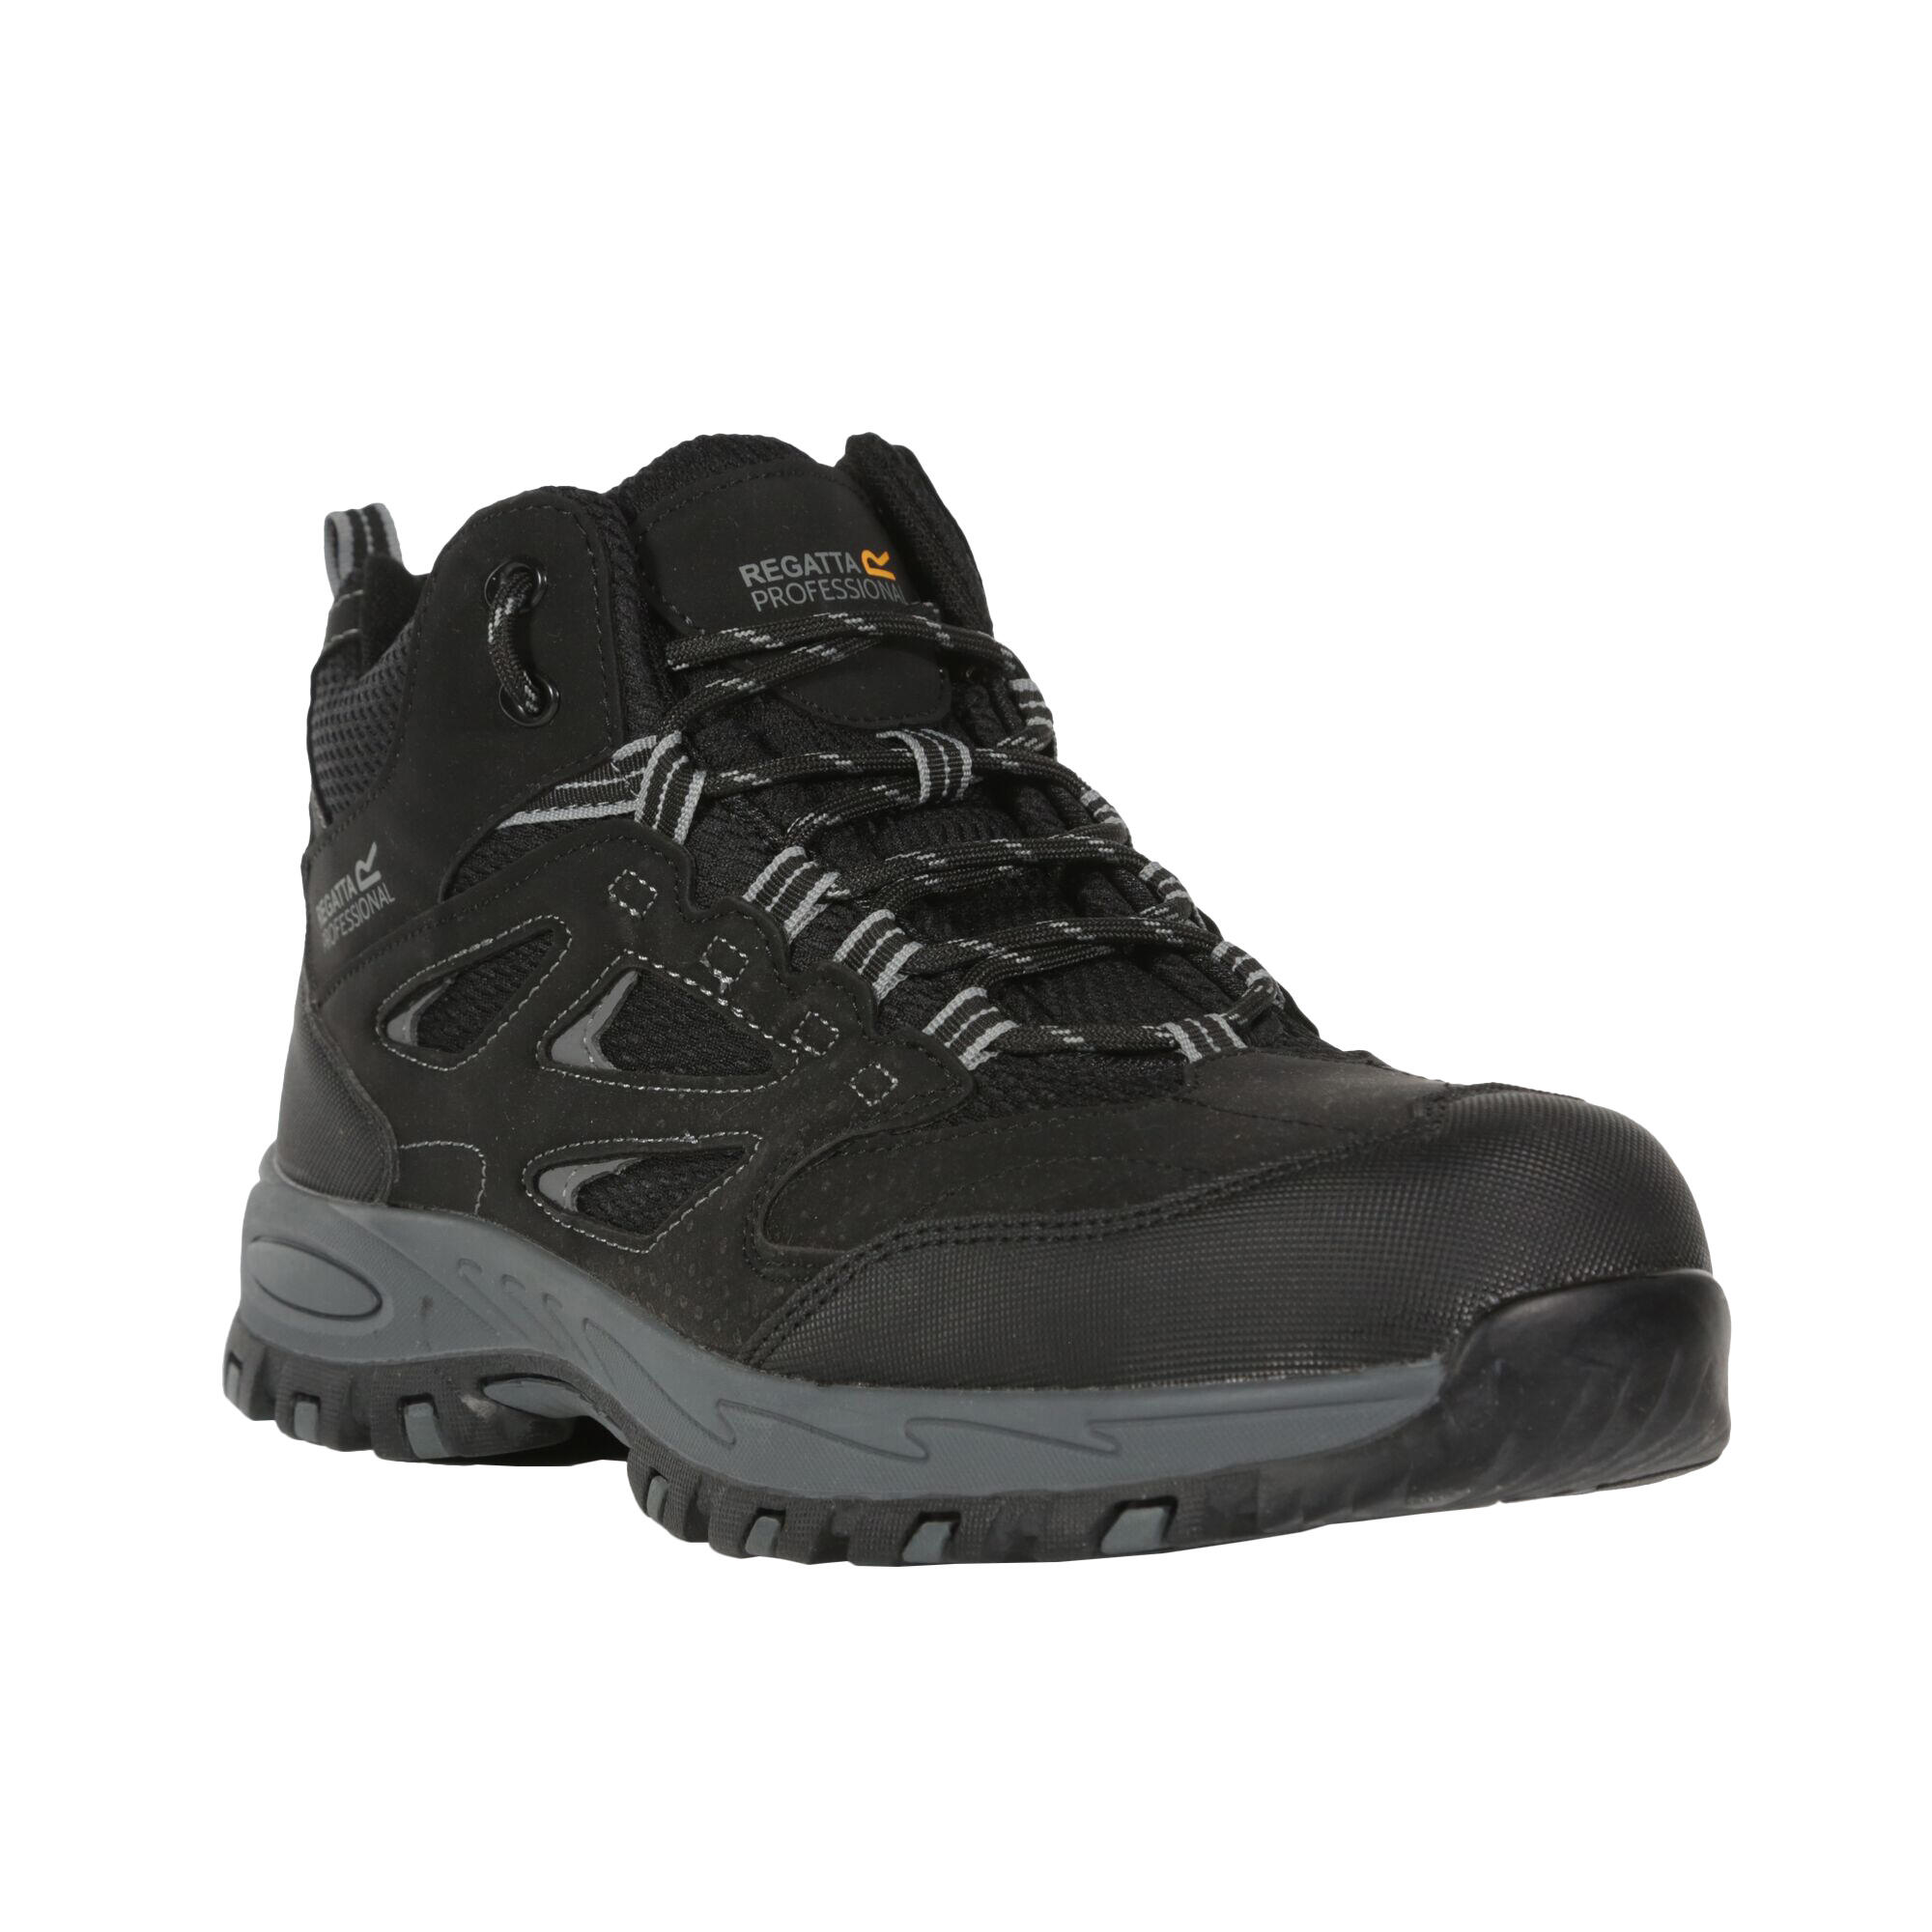 REGATTA Mens Mudstone Safety Boots (Black/Granite)